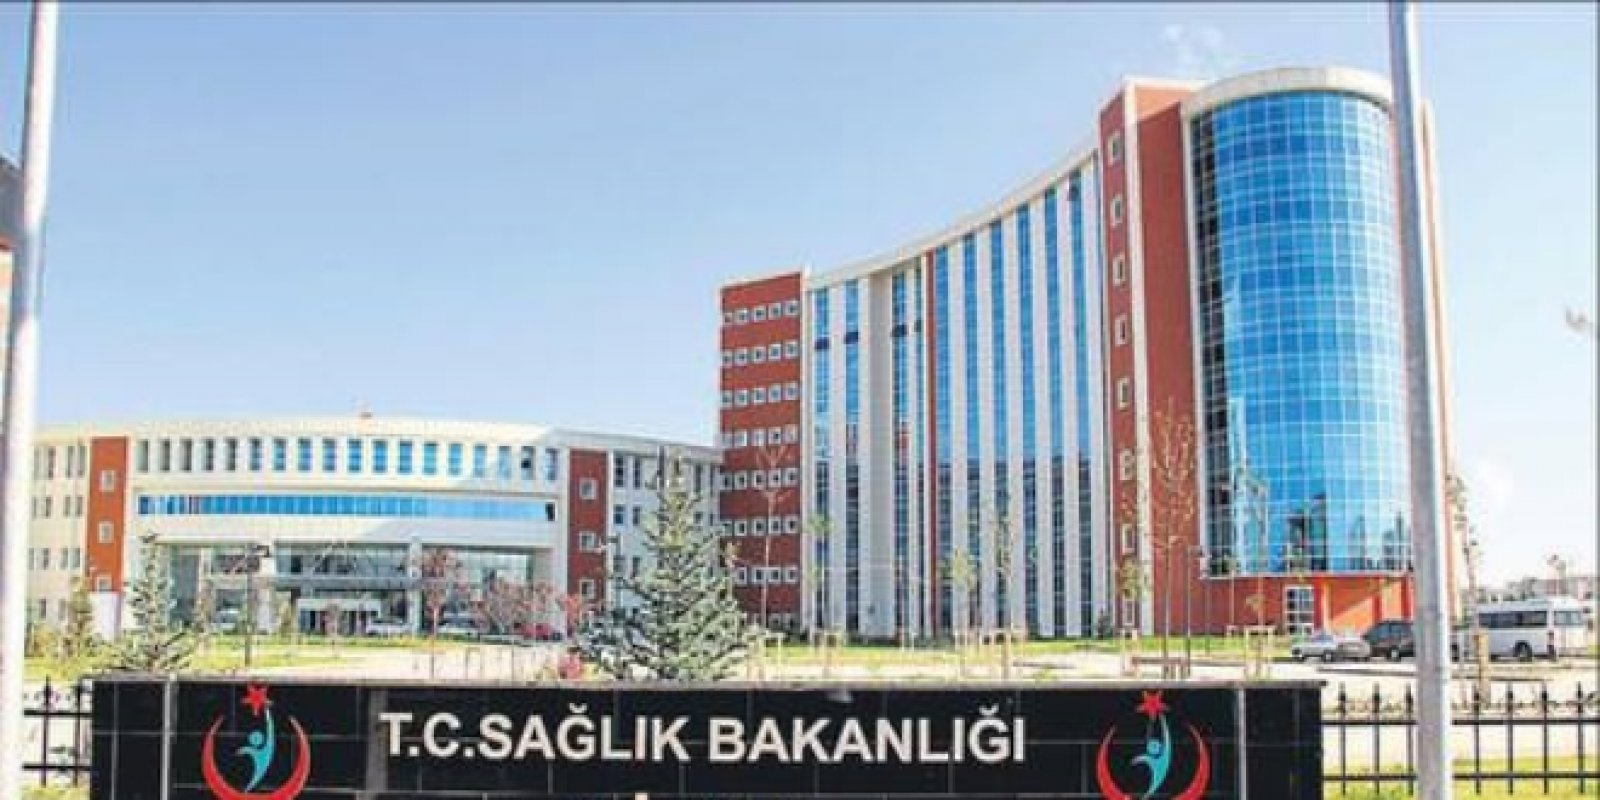 Sivas Public Hospital